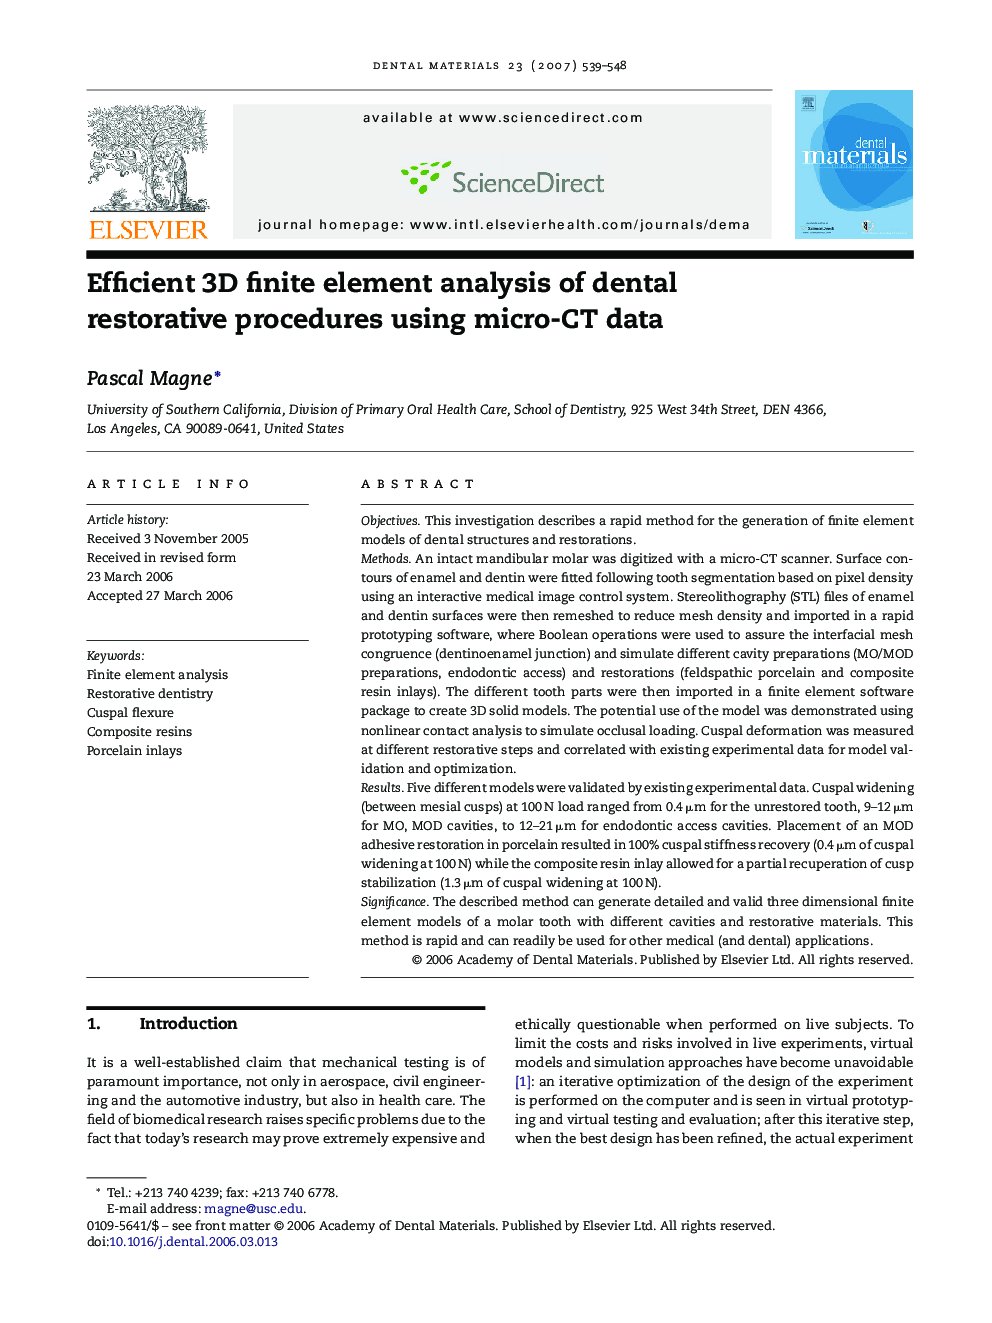 Efficient 3D finite element analysis of dental restorative procedures using micro-CT data